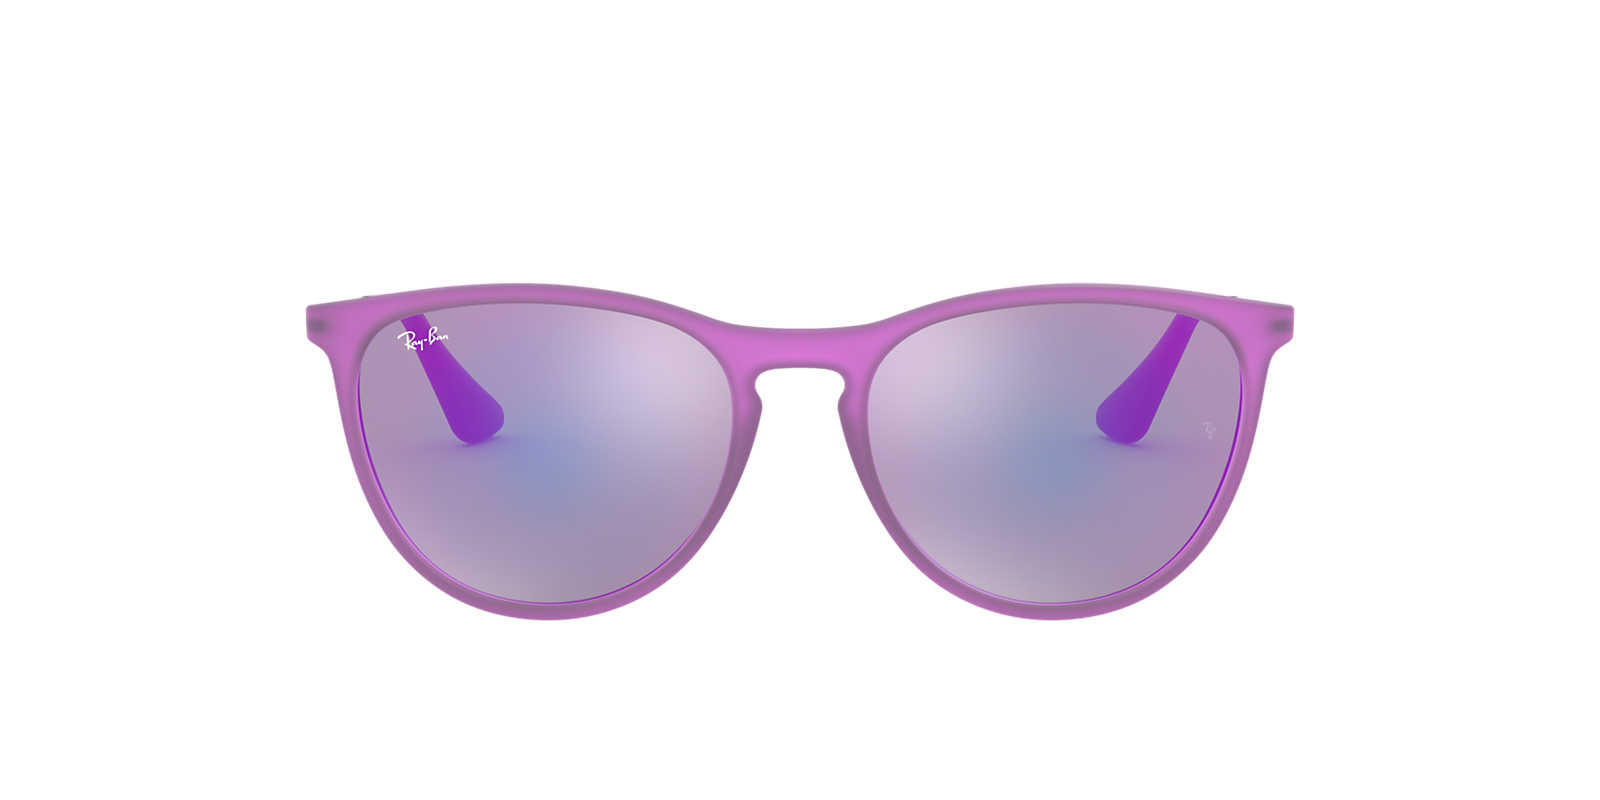 2019 ray ban sunglasses sale cheap online sale